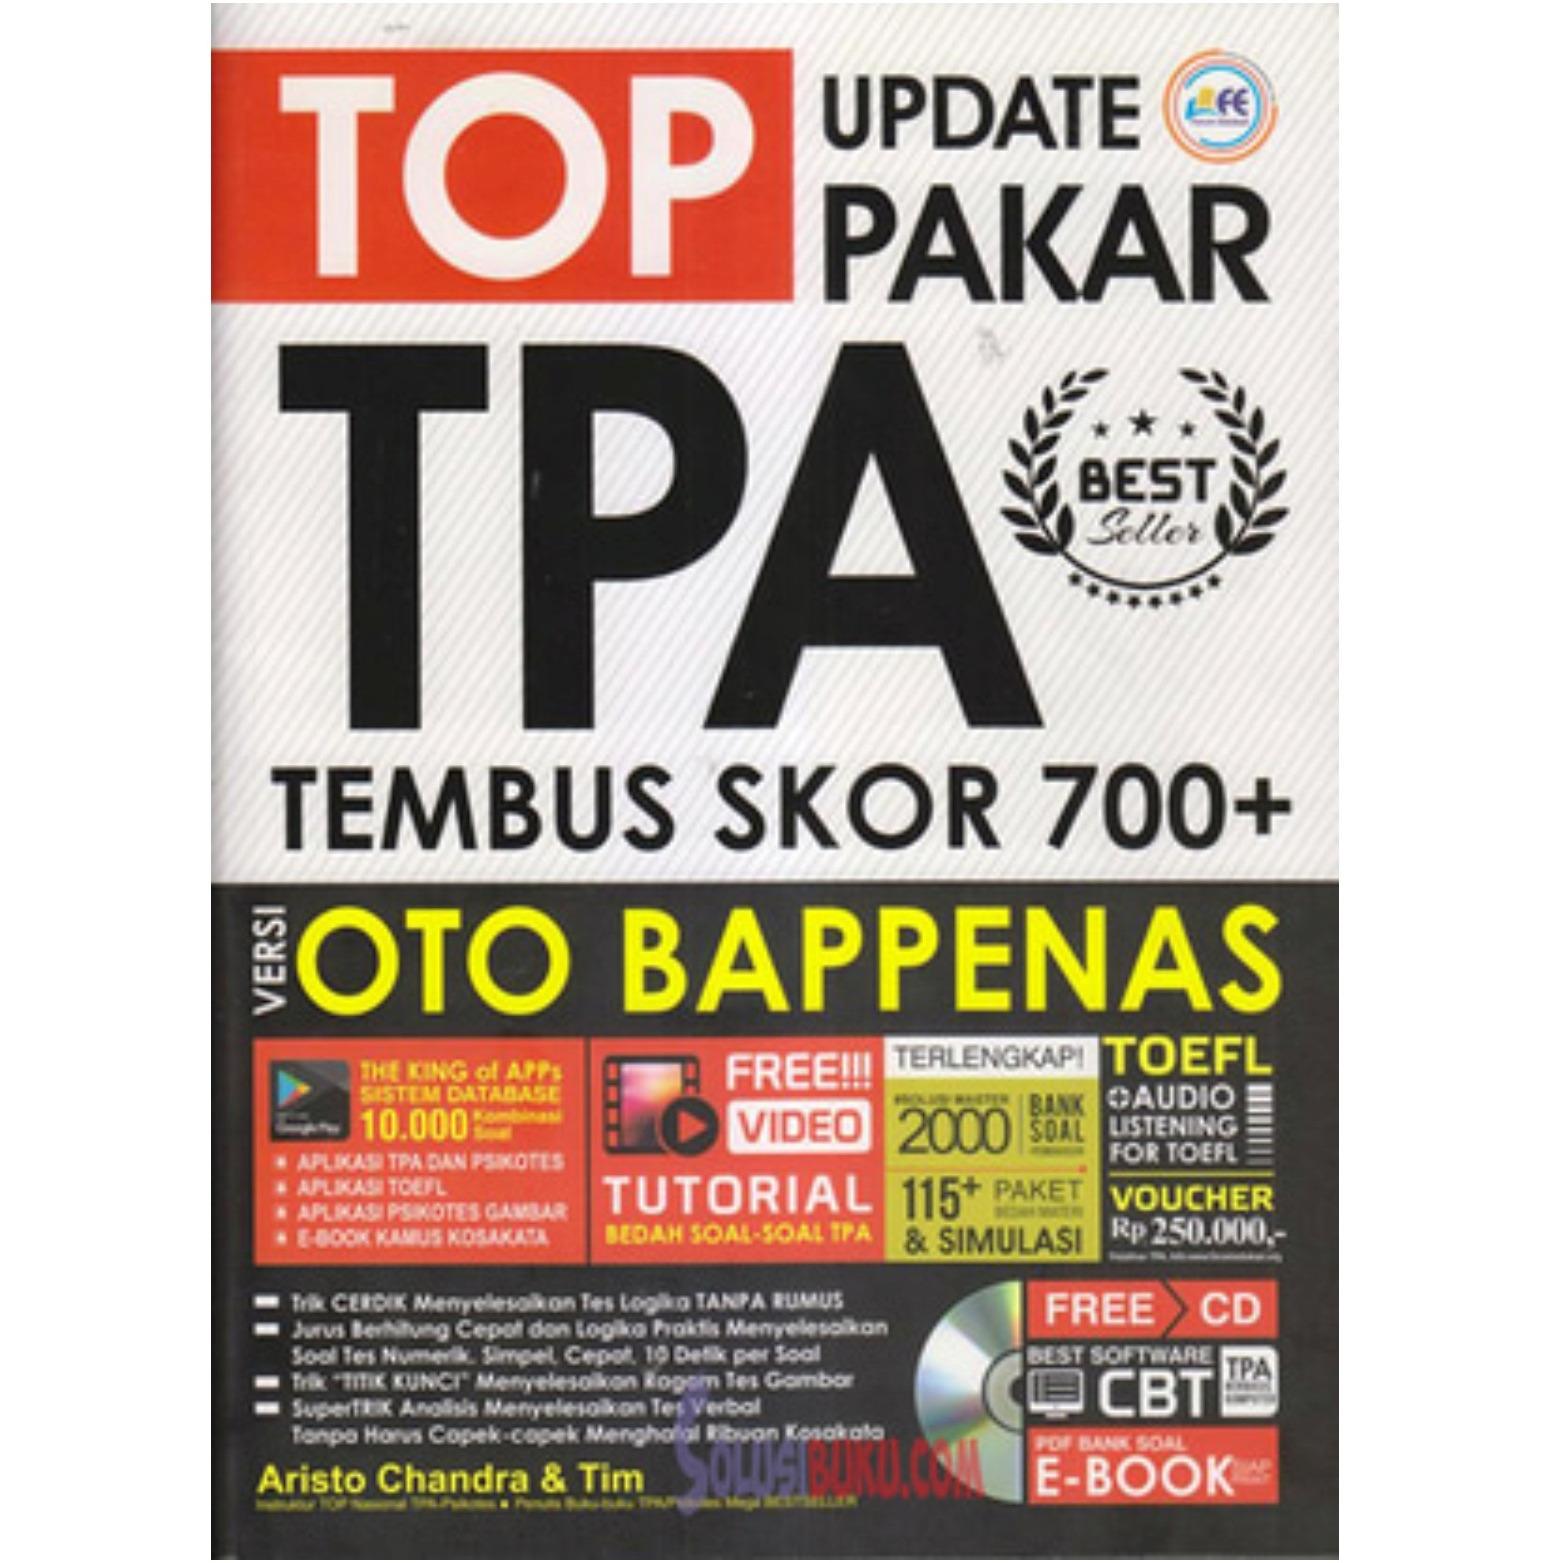 Cheapest Price Top Update Pakar Tpa Tembus Skor 700 Versi Oto Bappenas sale Hanya